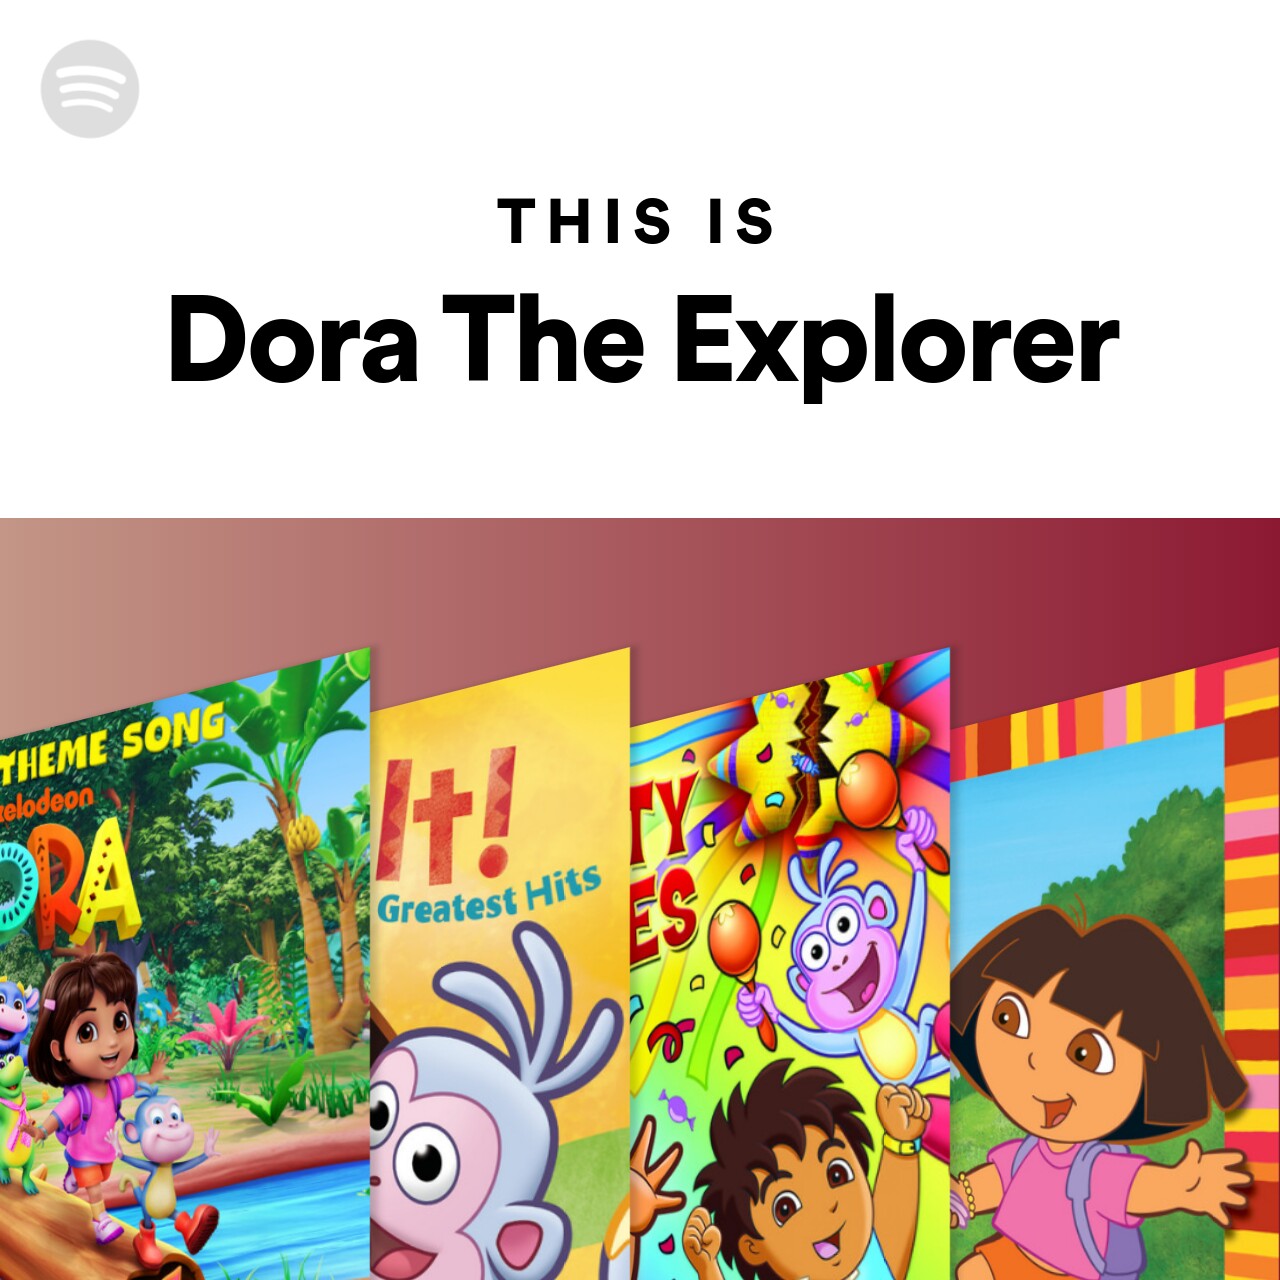 This Is Dora The Explorer